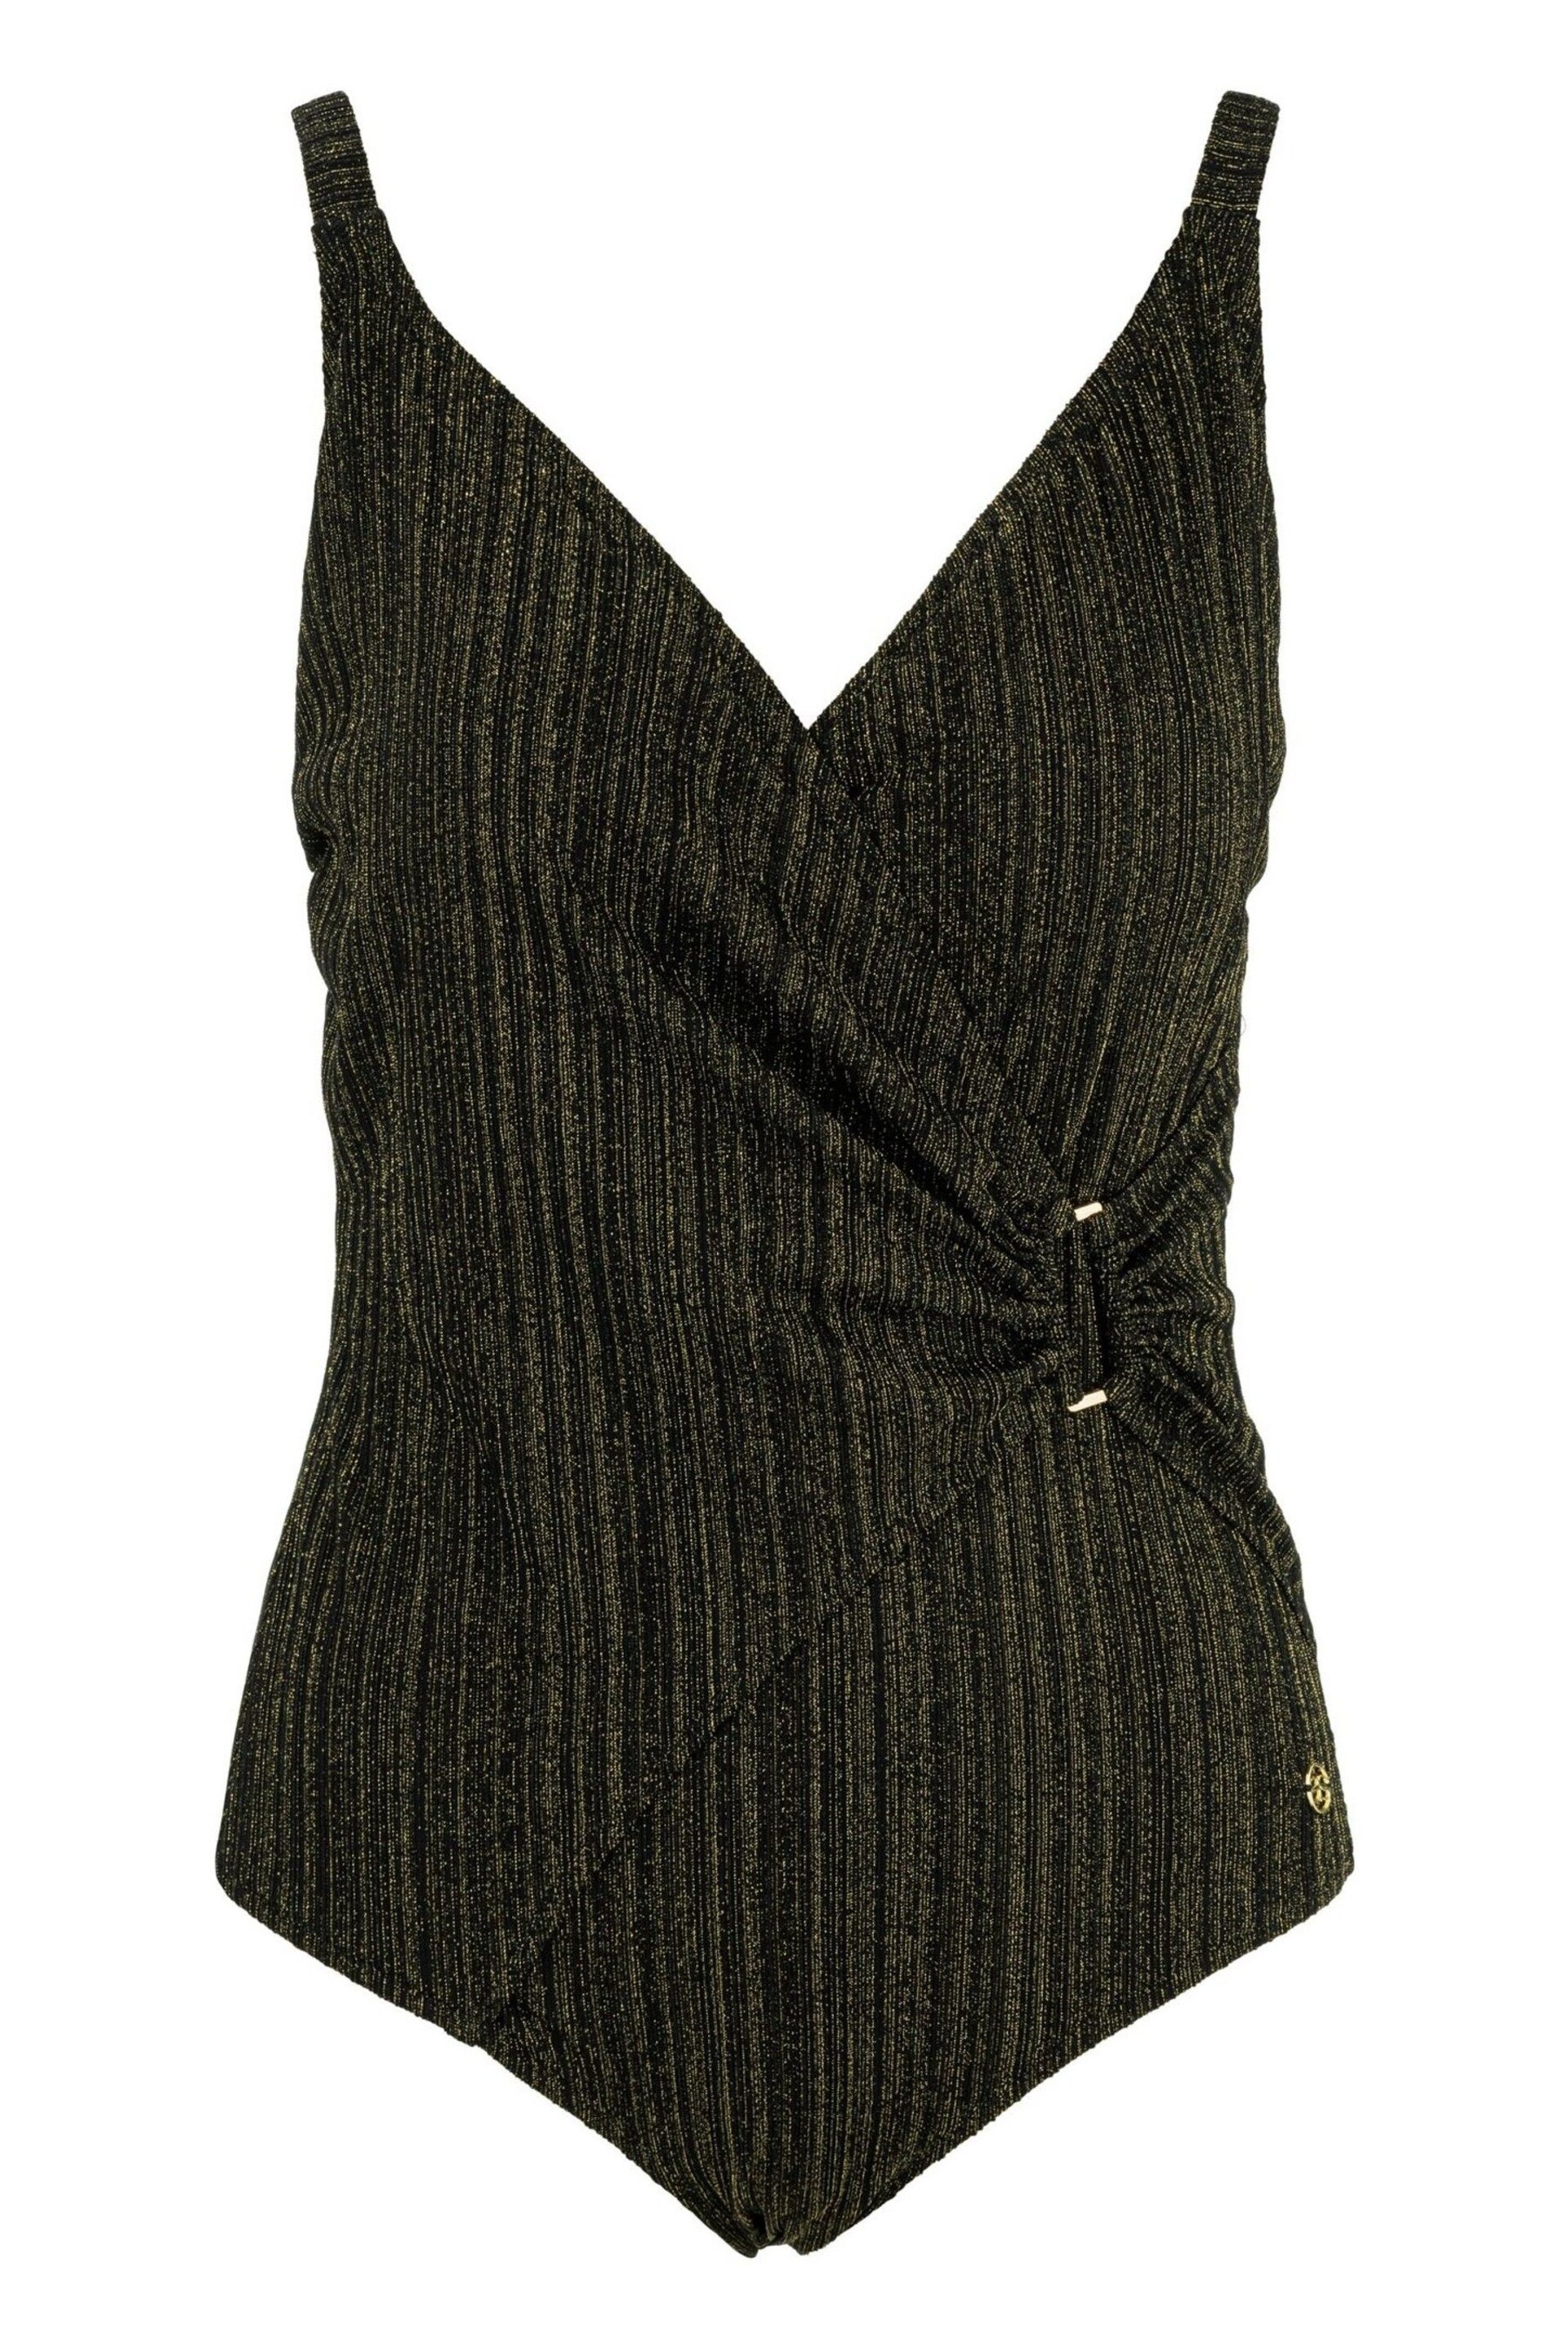 Seaspray Athena Metallic Mock Wrap Strap Black Swimsuit Longer Length - Image 3 of 3